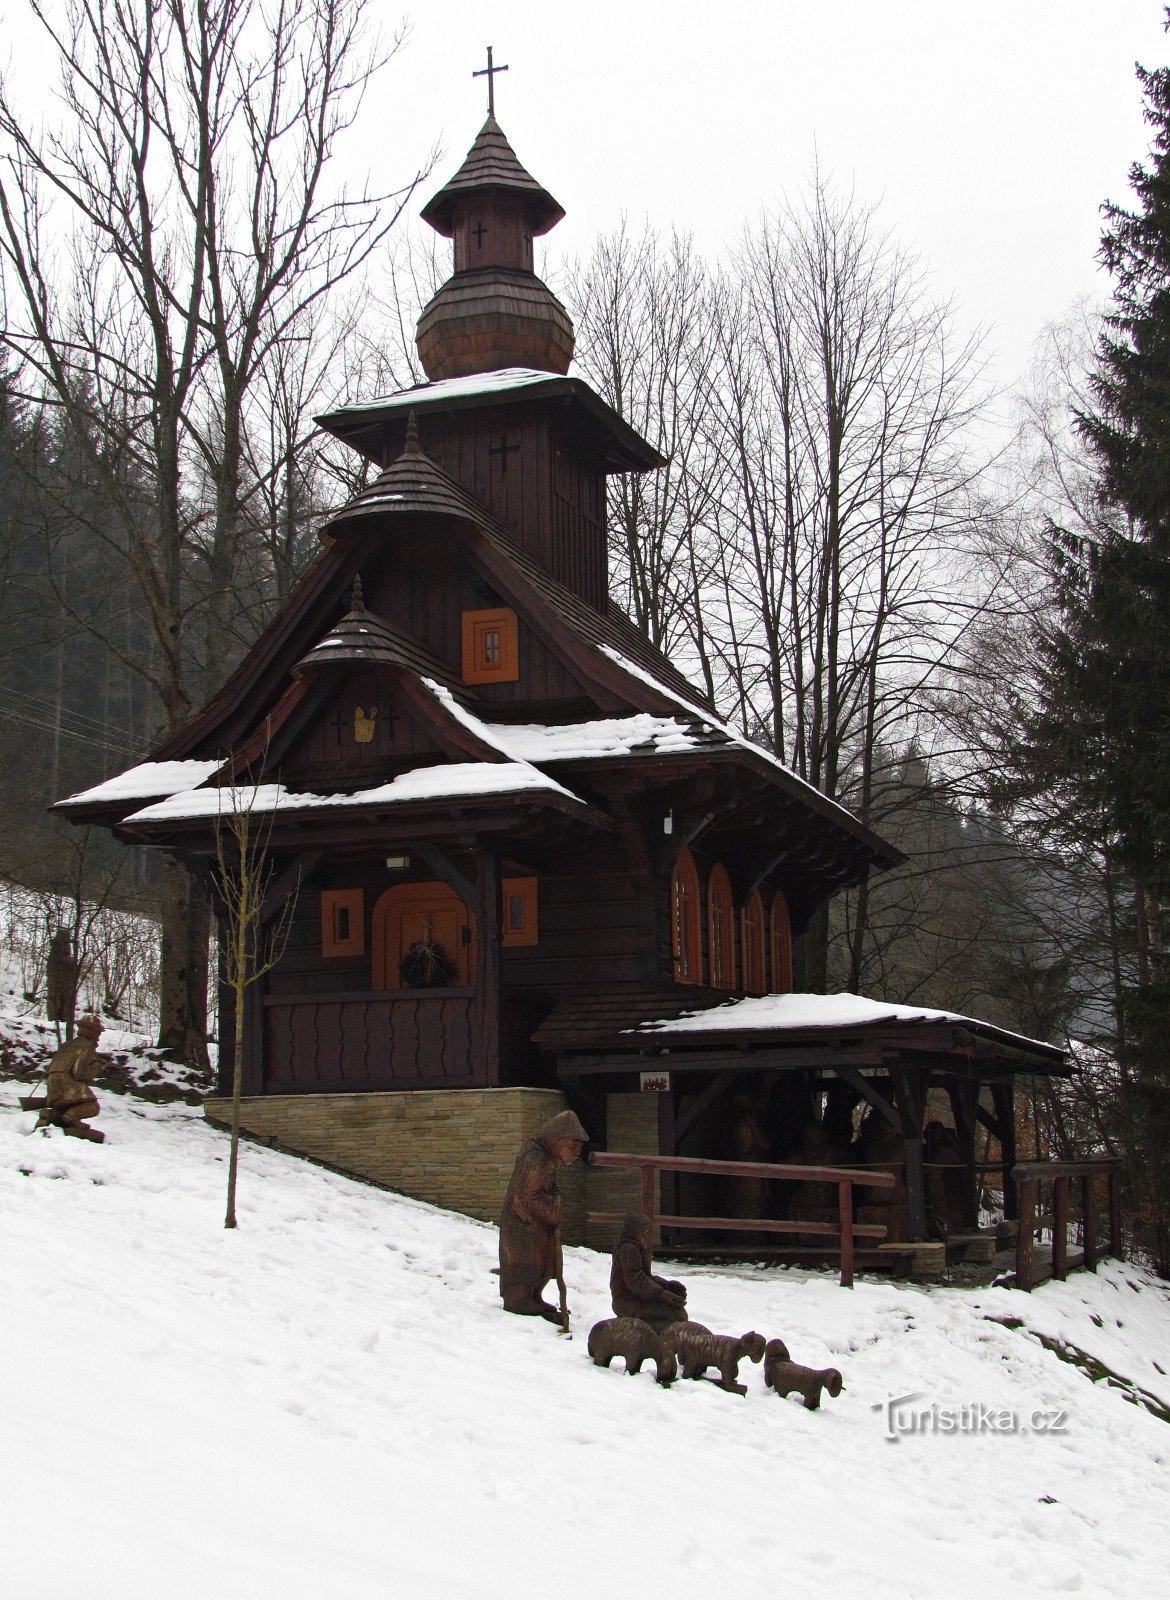 Velké Karlovice - chapelle Saint-Hubert et l'Arbre de Vie II